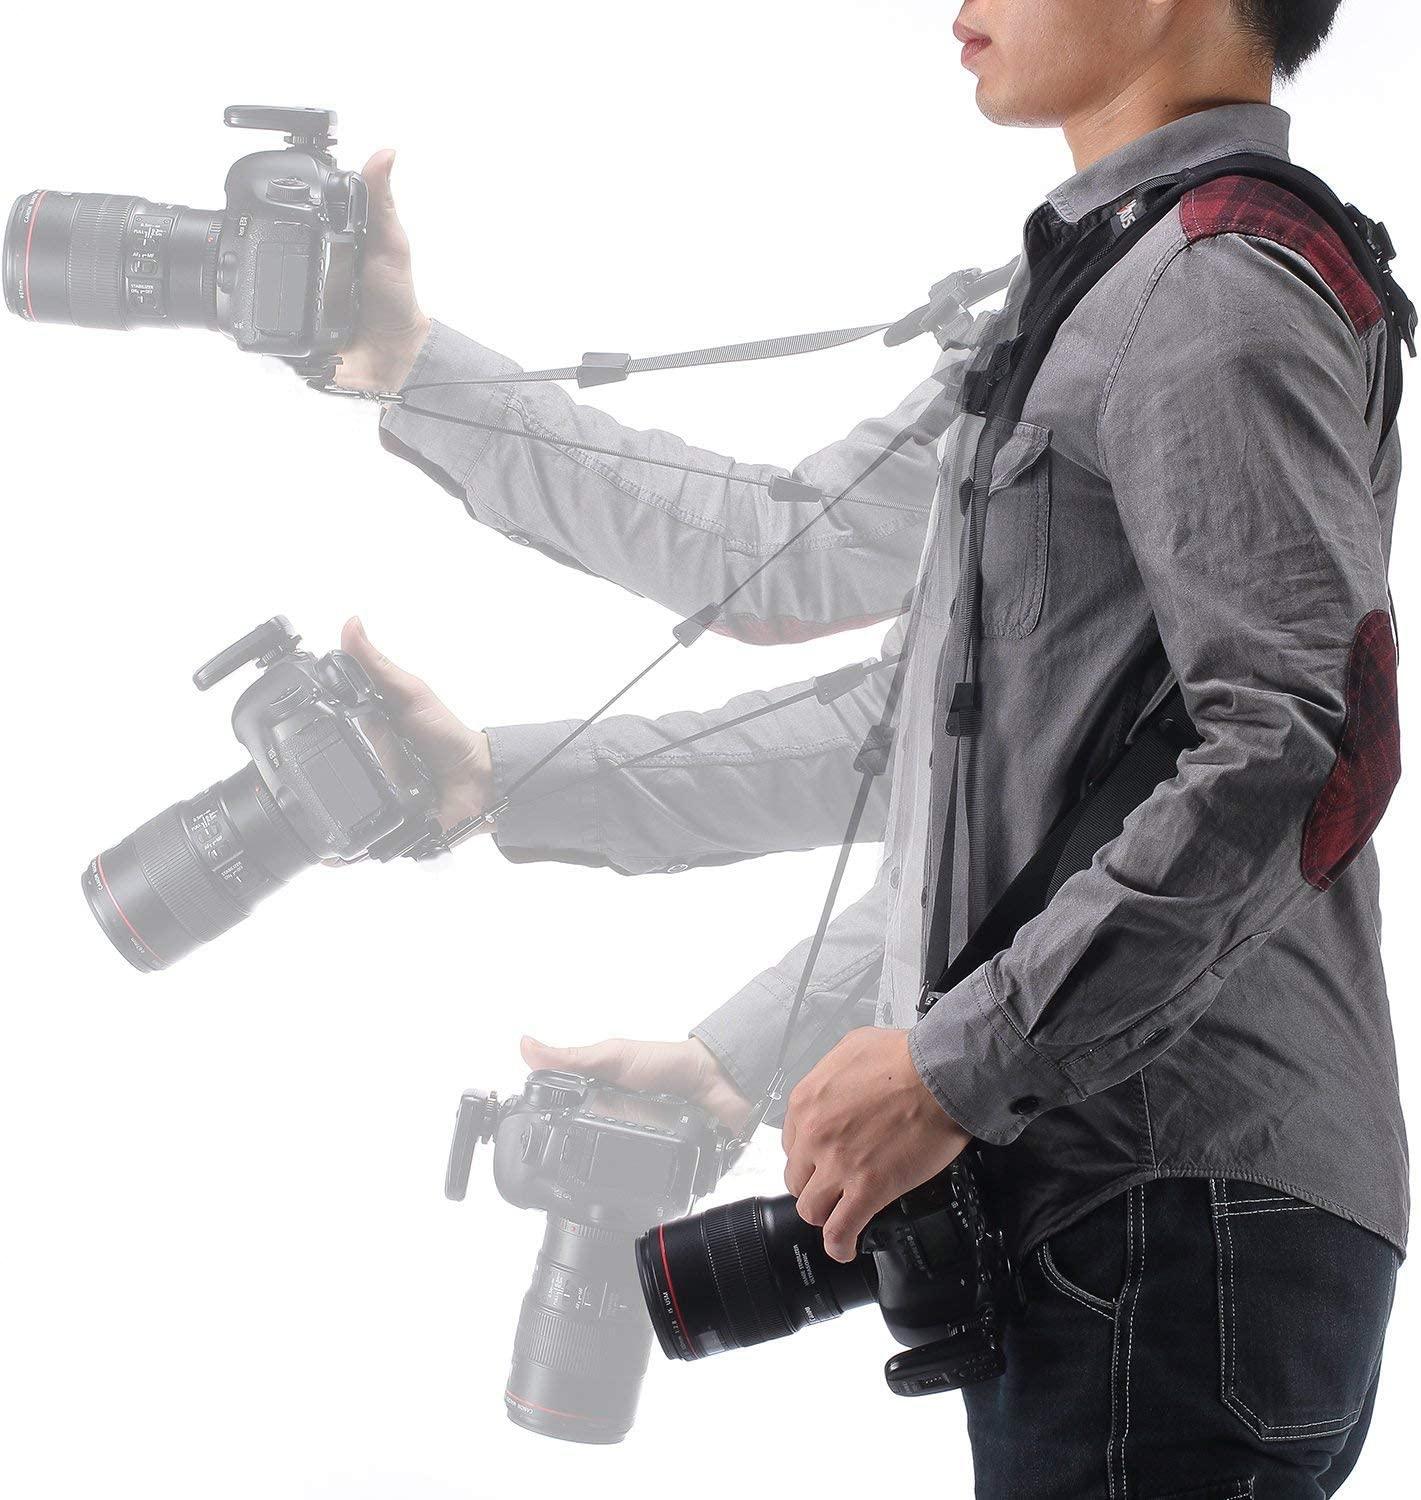 Double Strap Adjustable Digital Camera Double Shoulder Quick Release Camera Strap Camcorder Straps